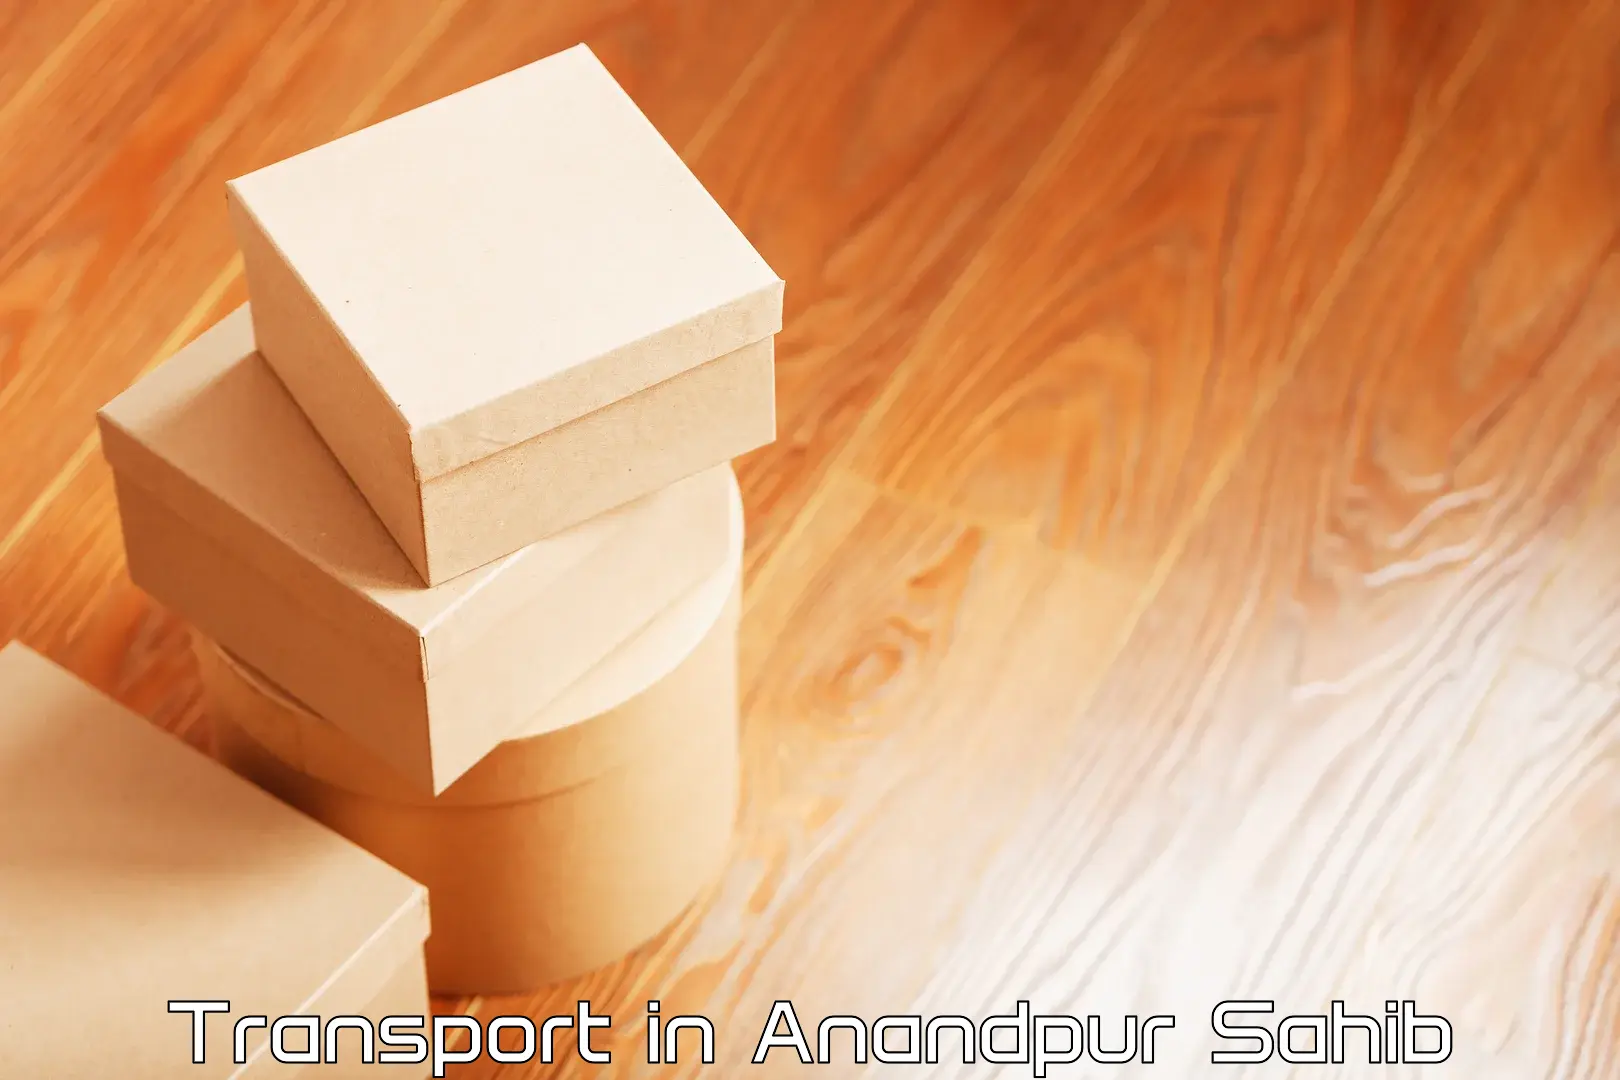 Container transport service in Anandpur Sahib